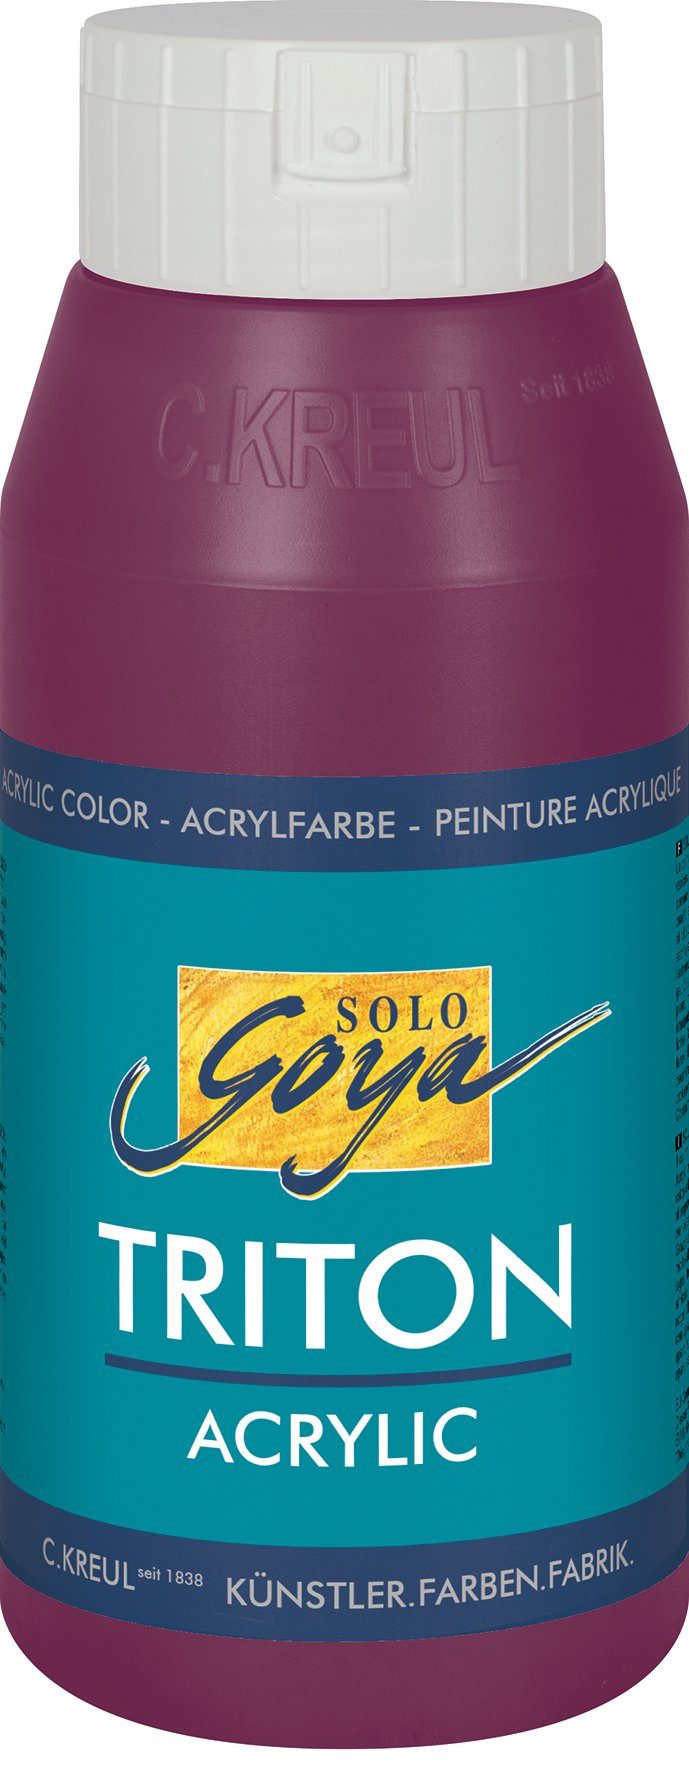 Bordeaux 750 Goya Kreul Acrylic, Solo ml Acrylfarbe Triton